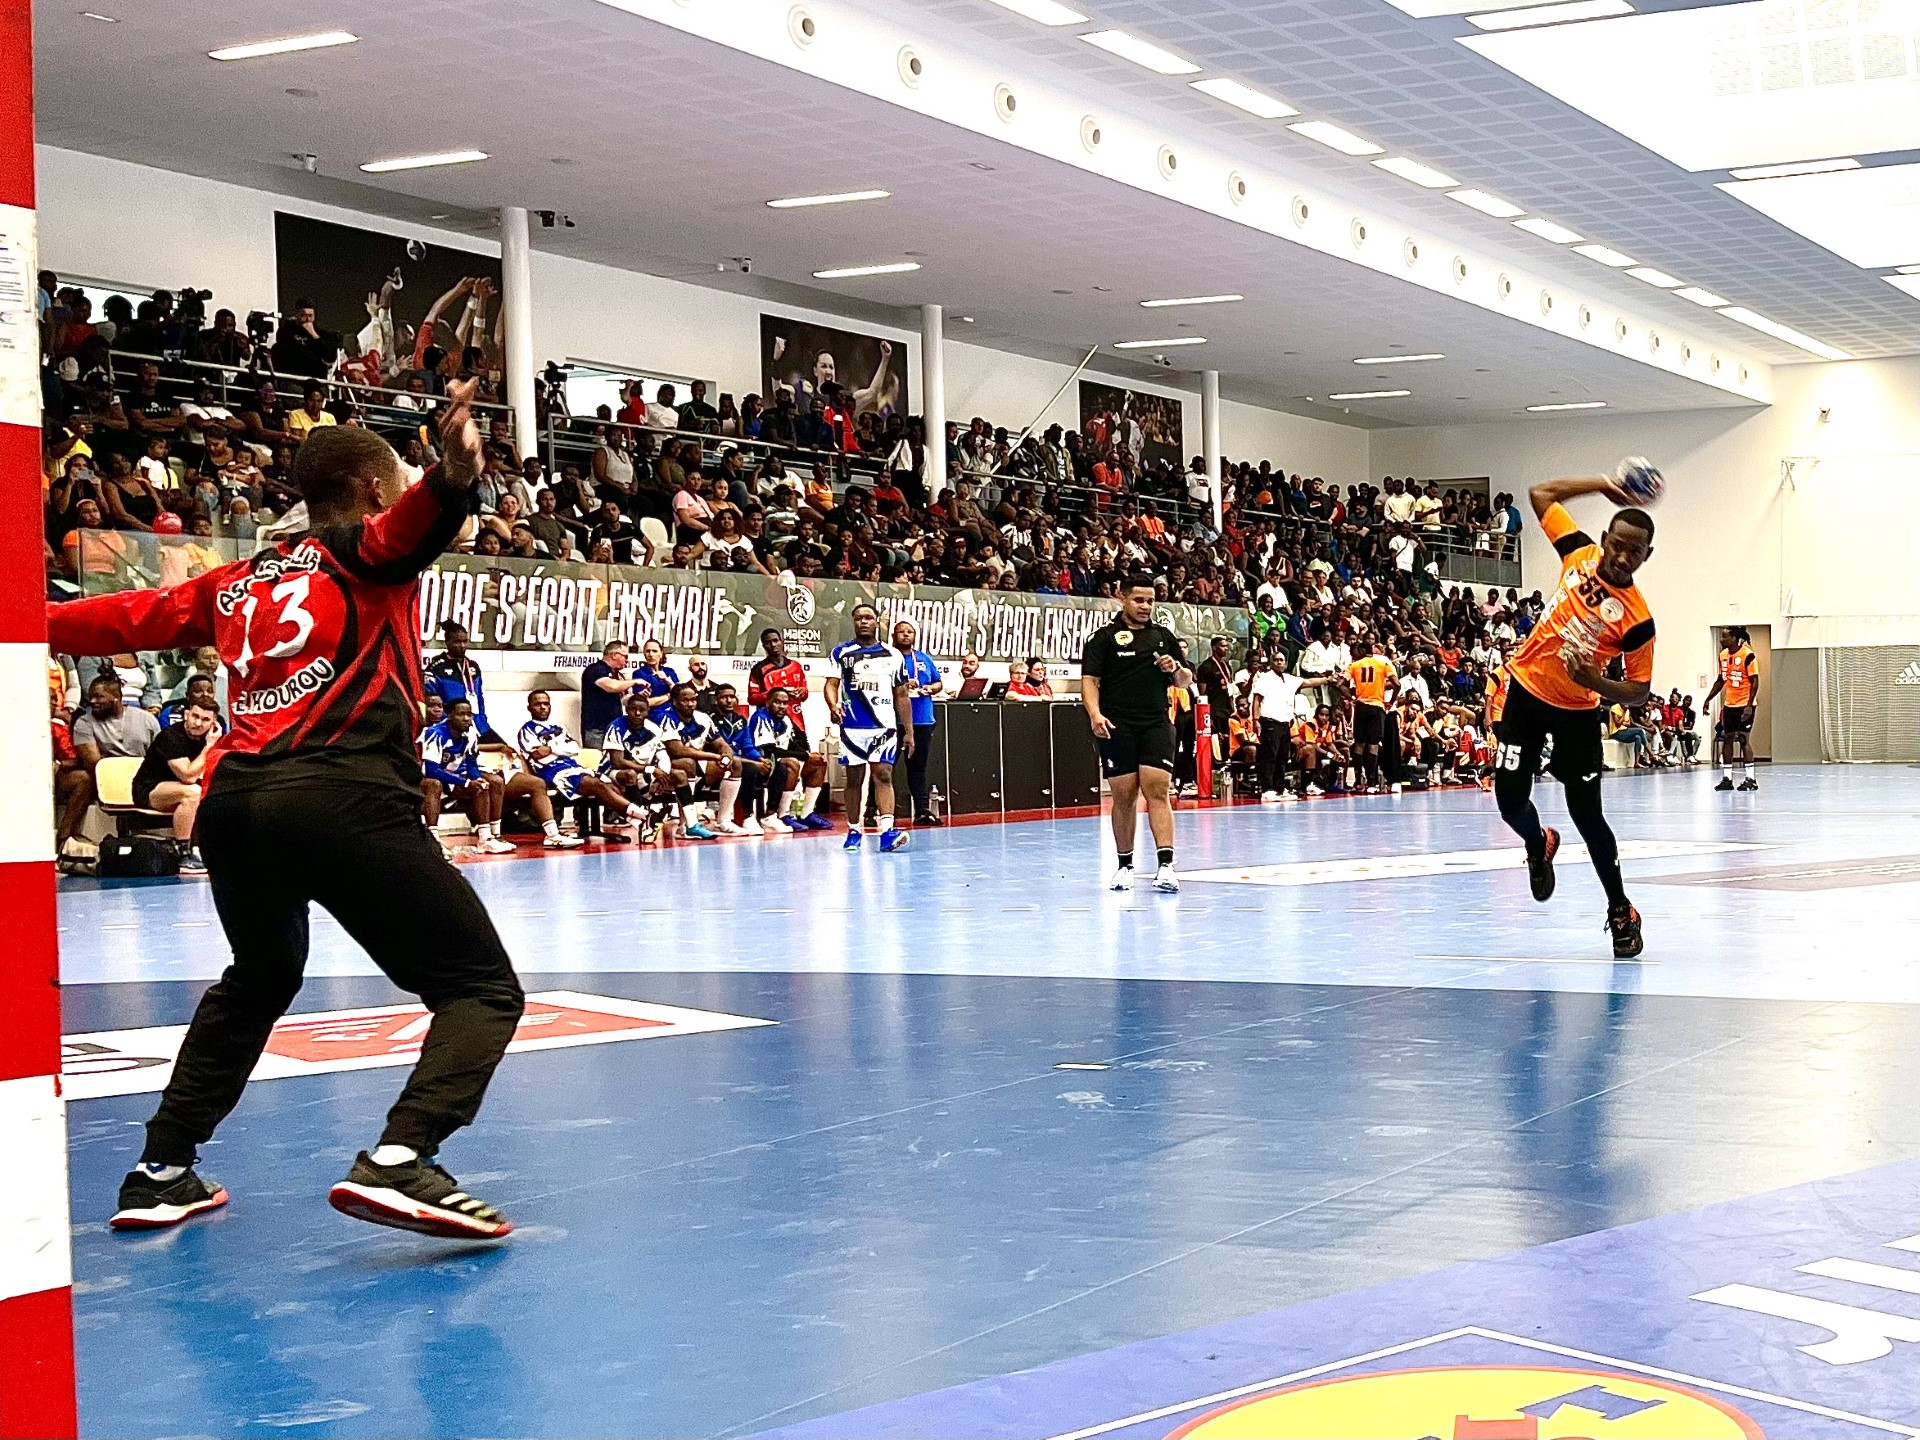     Finalités de Handball : carton plein martiniquais, l'Étoile sauve la Guadeloupe

